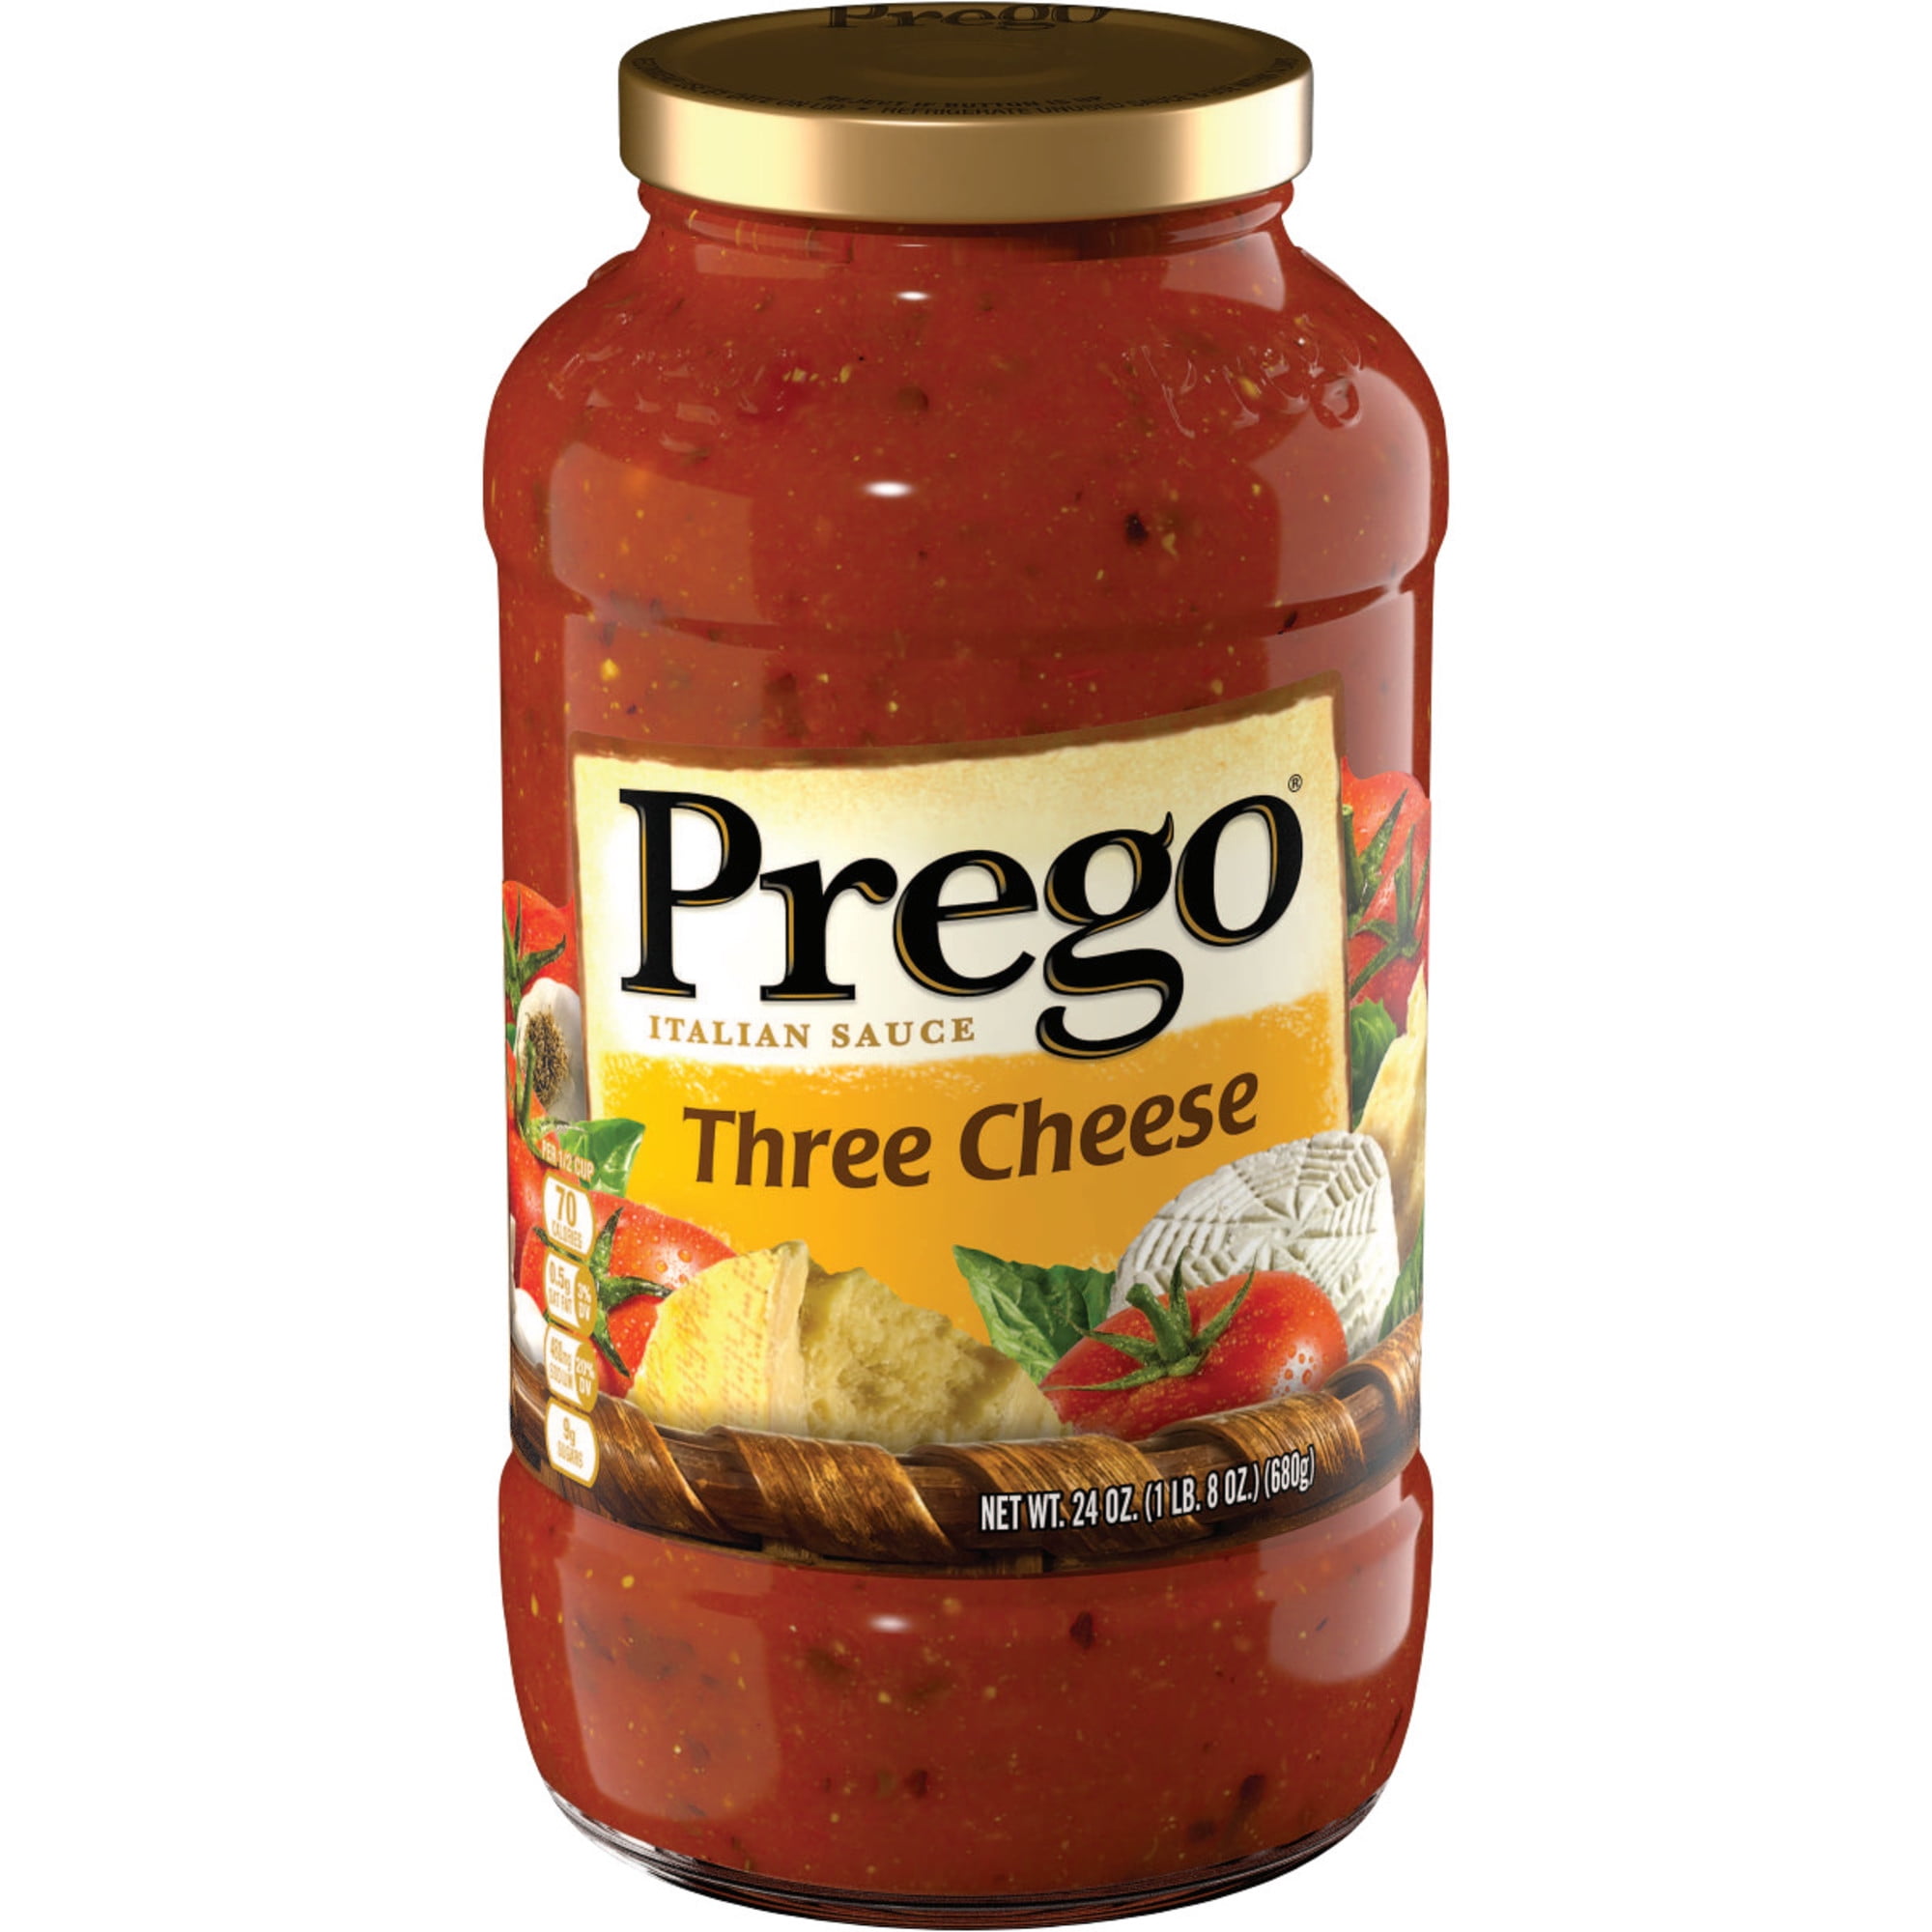 Prego Three Cheese Italian Sauce, 24 oz. - Walmart.com - Walmart.com